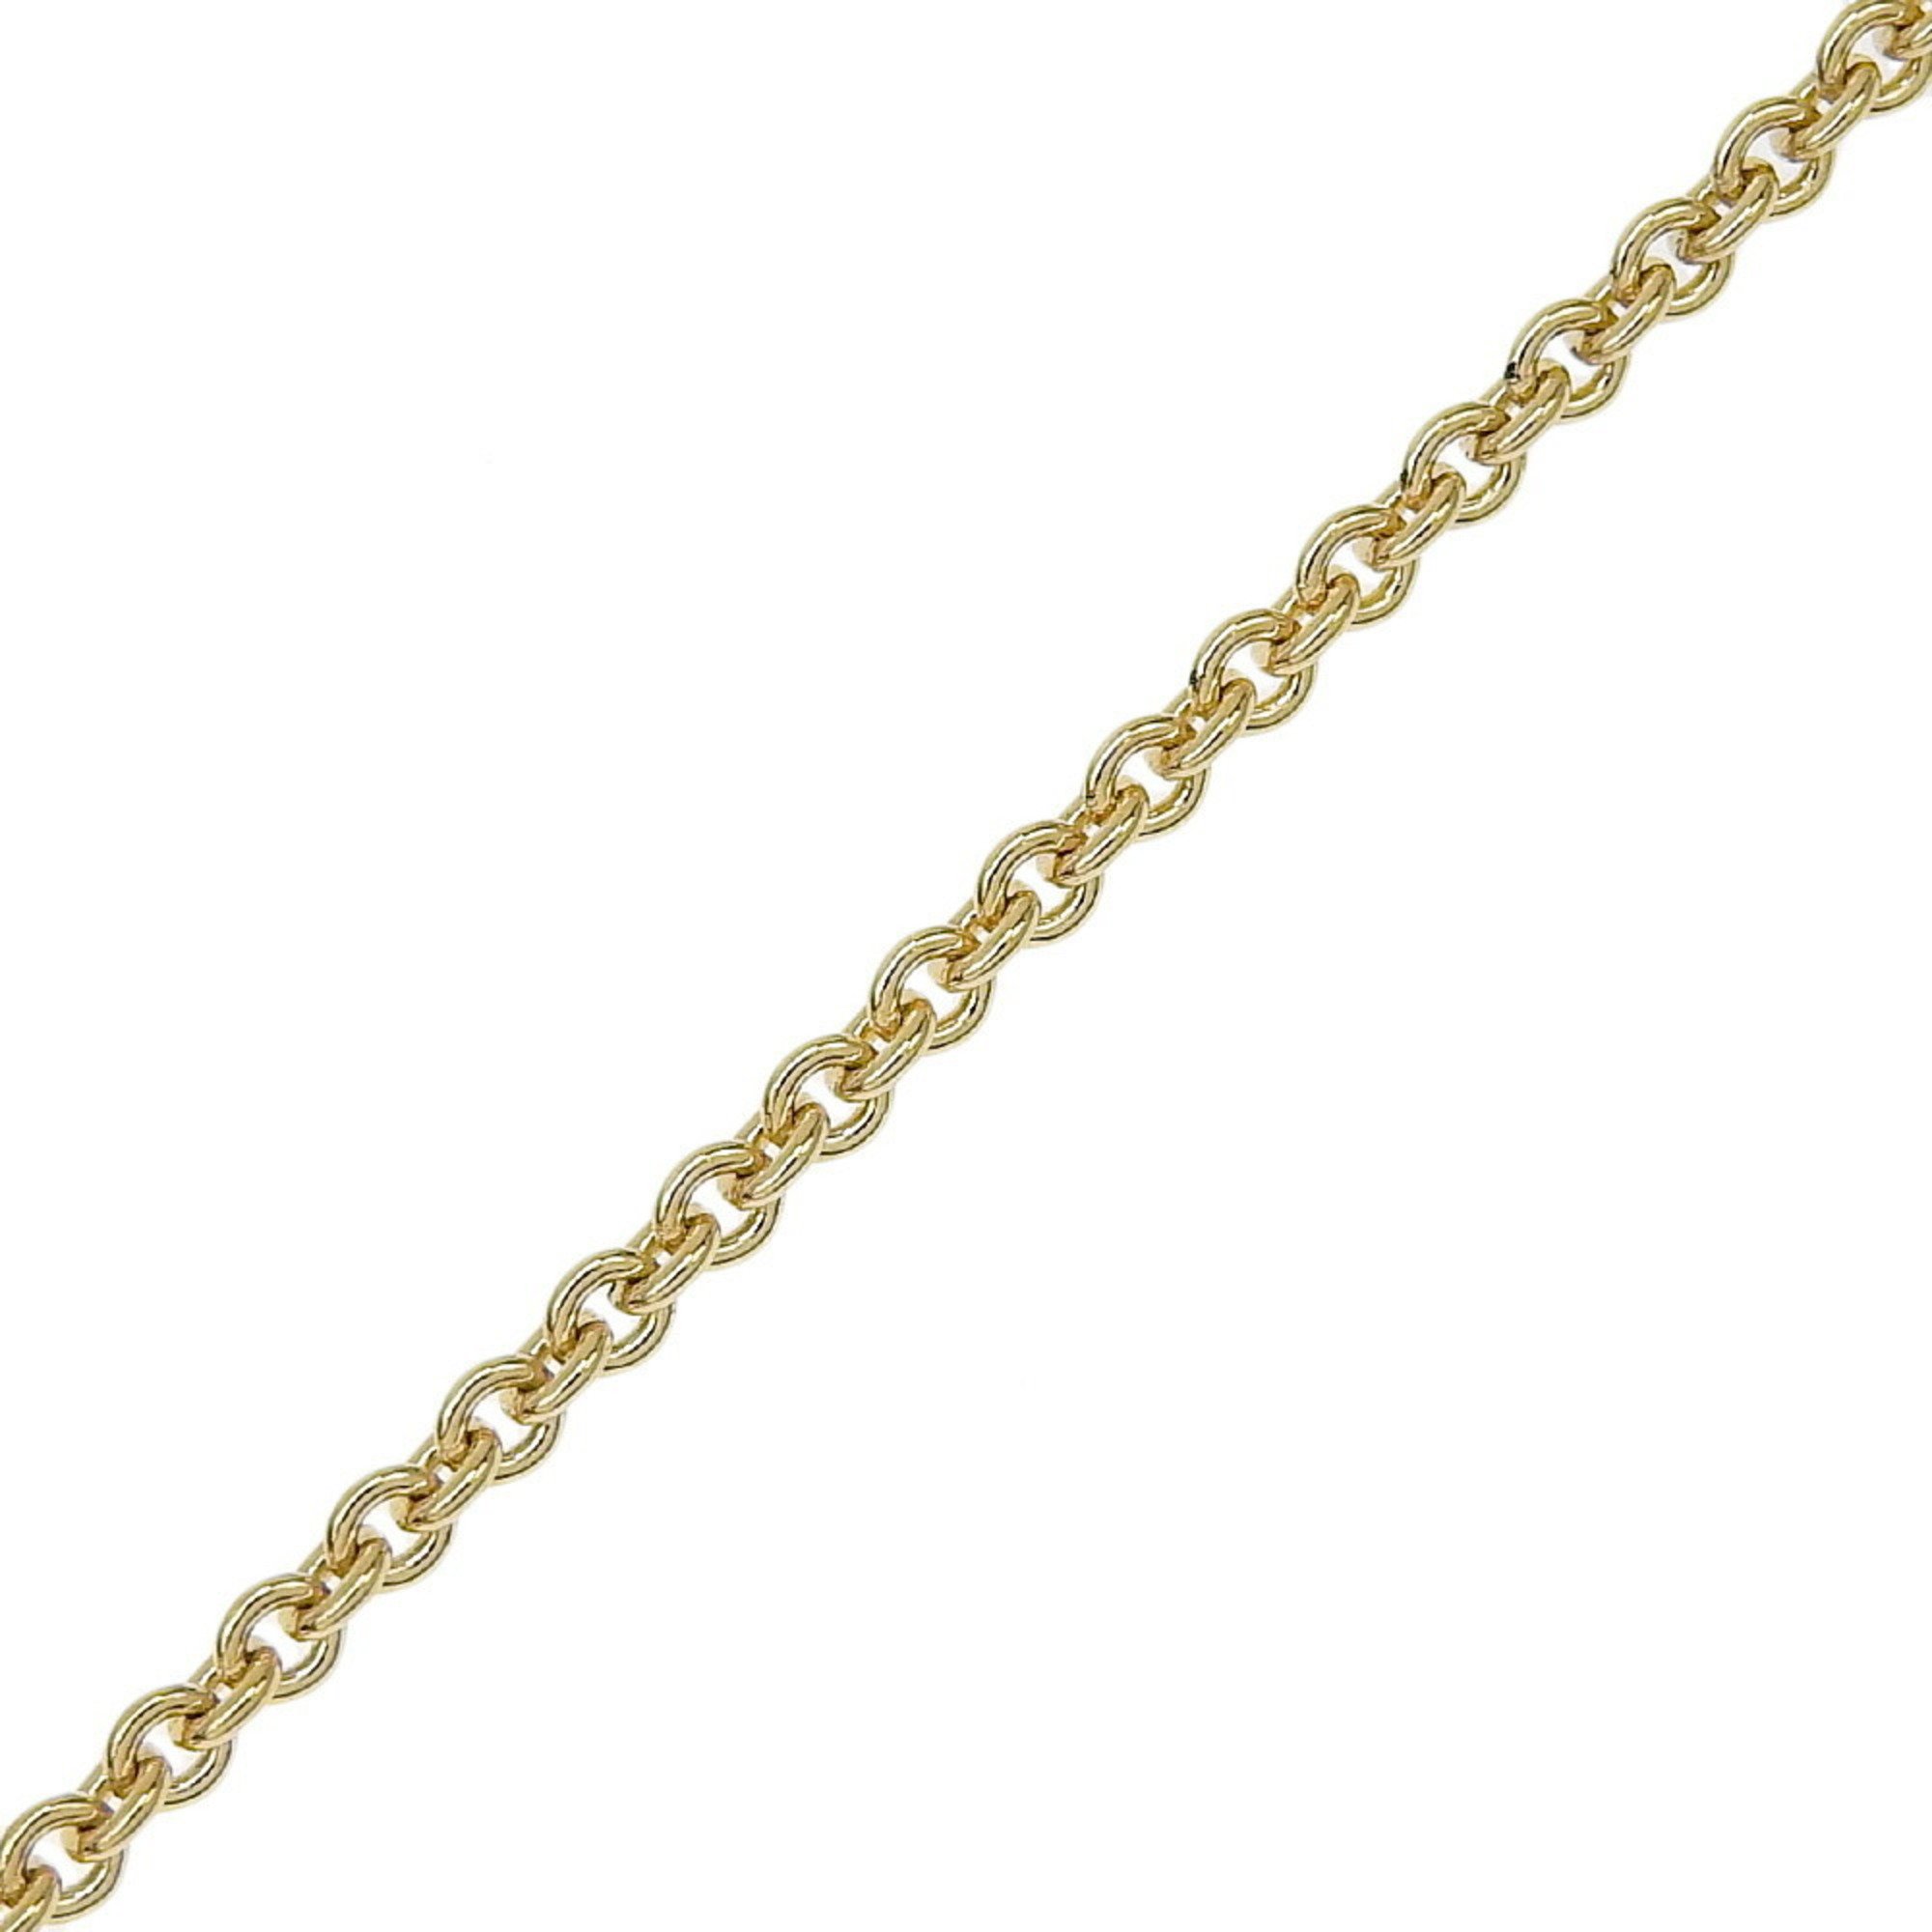 BVLGARI Tigradi Necklace, 18K Yellow Gold, approx. 16.1g, Women's, I120124003